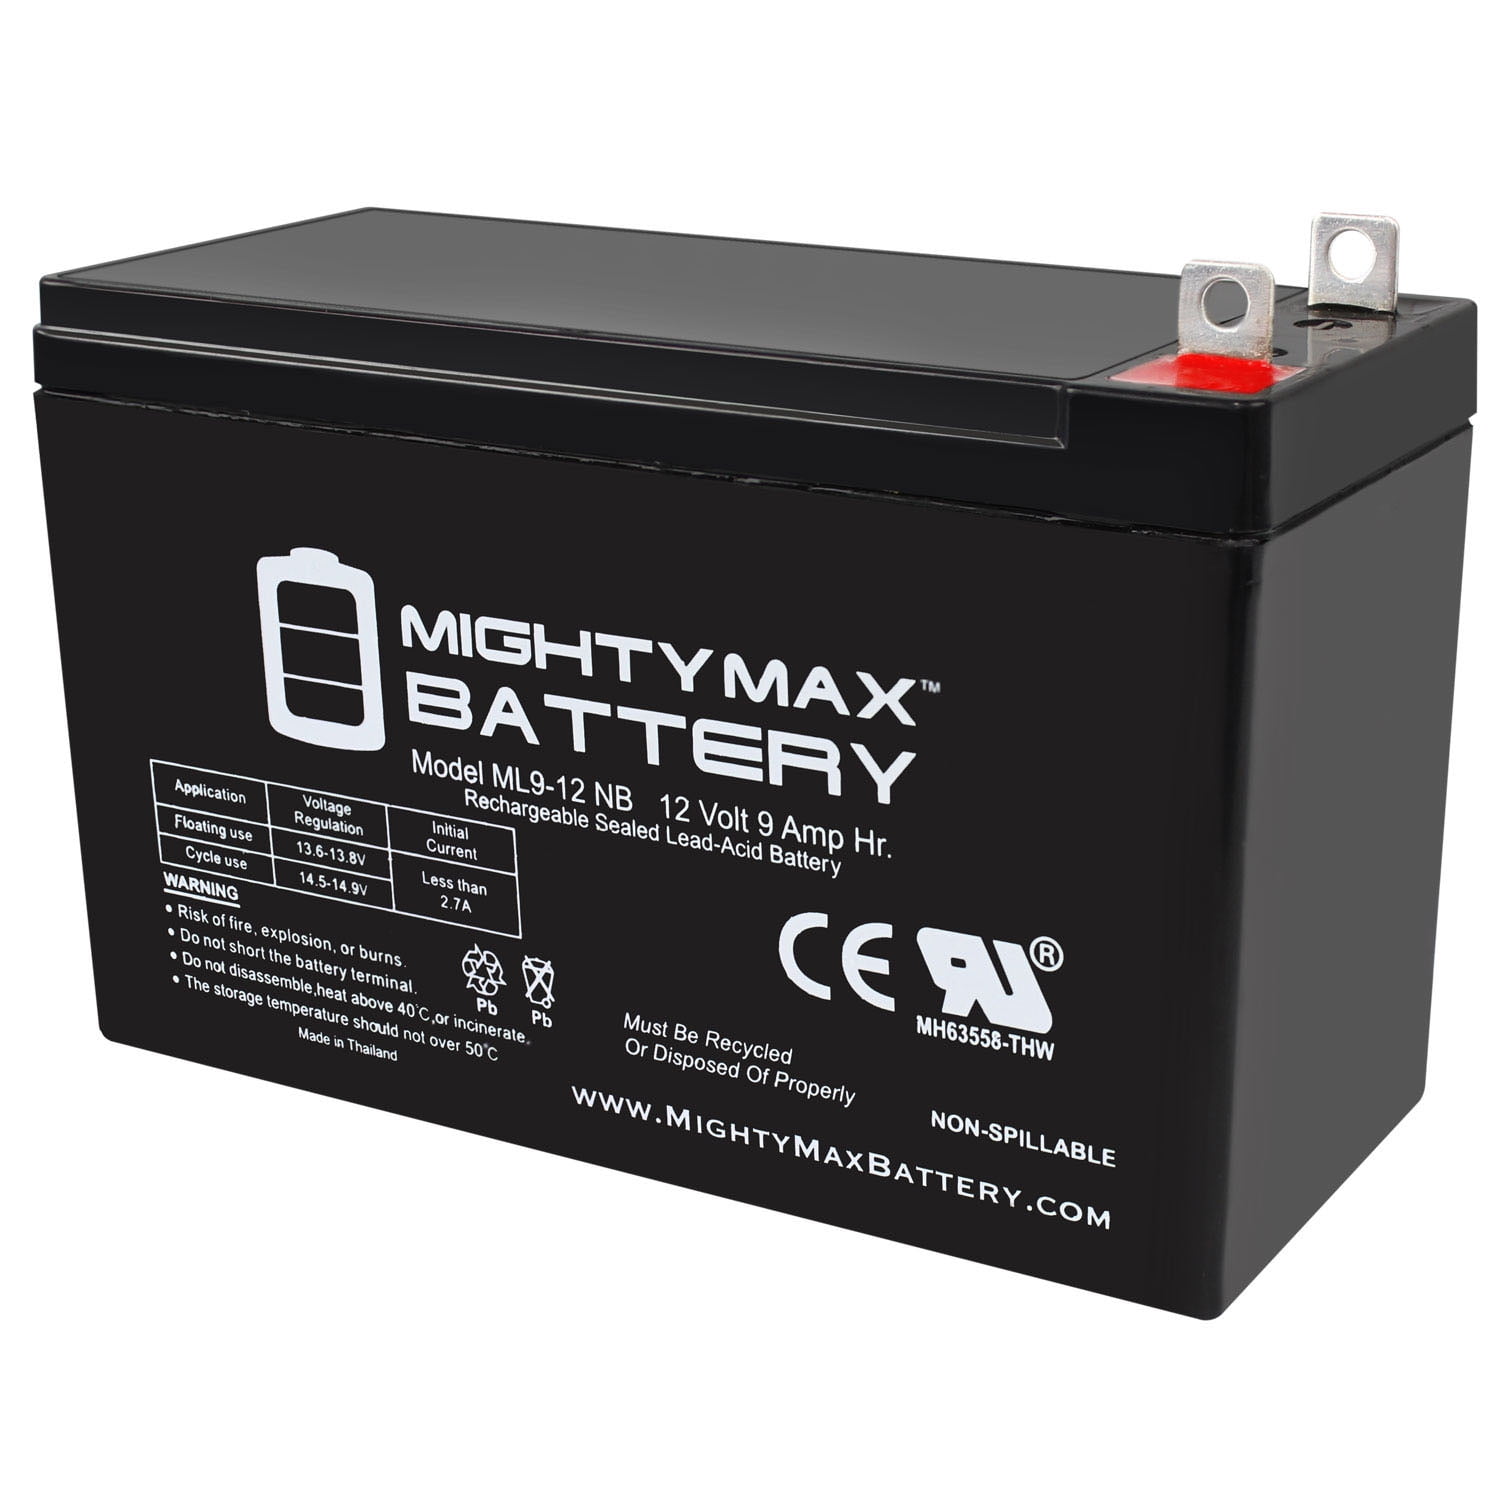 Batterie lithium 12V 9Ah - Réf. LTB12009L - Li-Tech